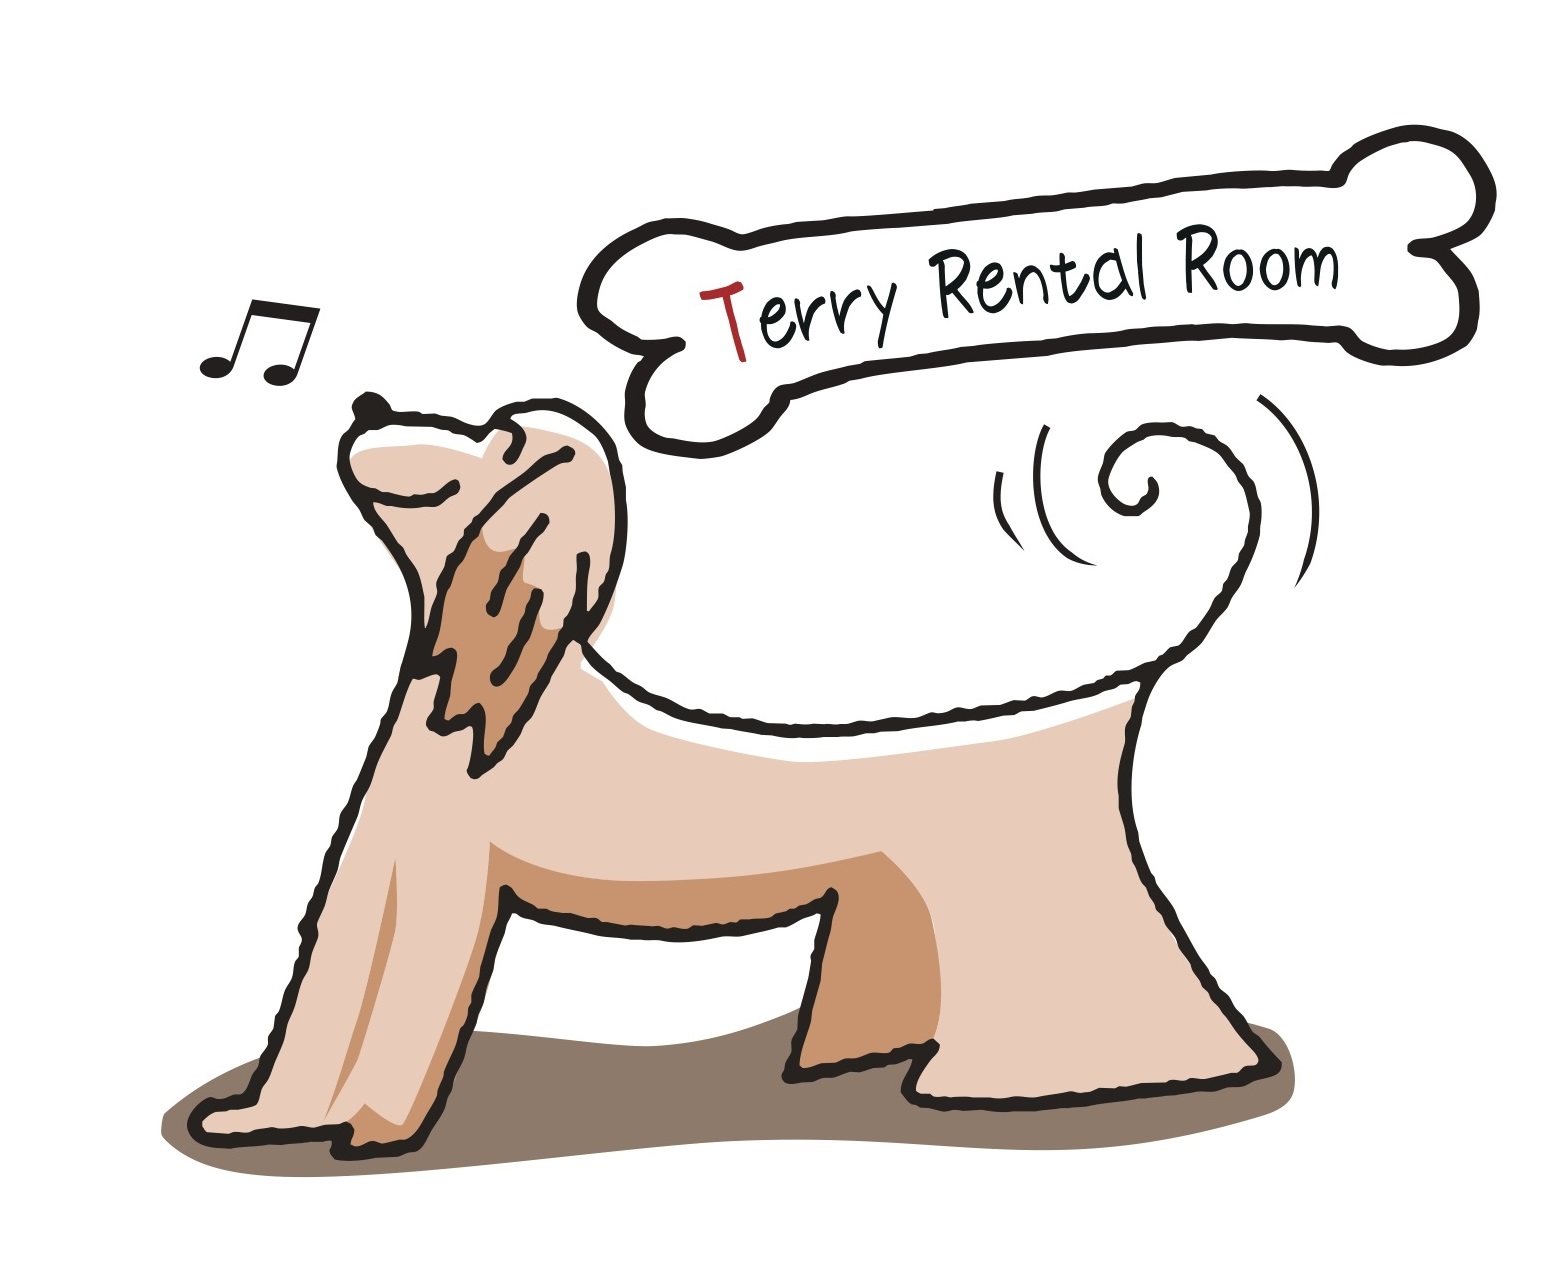 Terry Rental Room